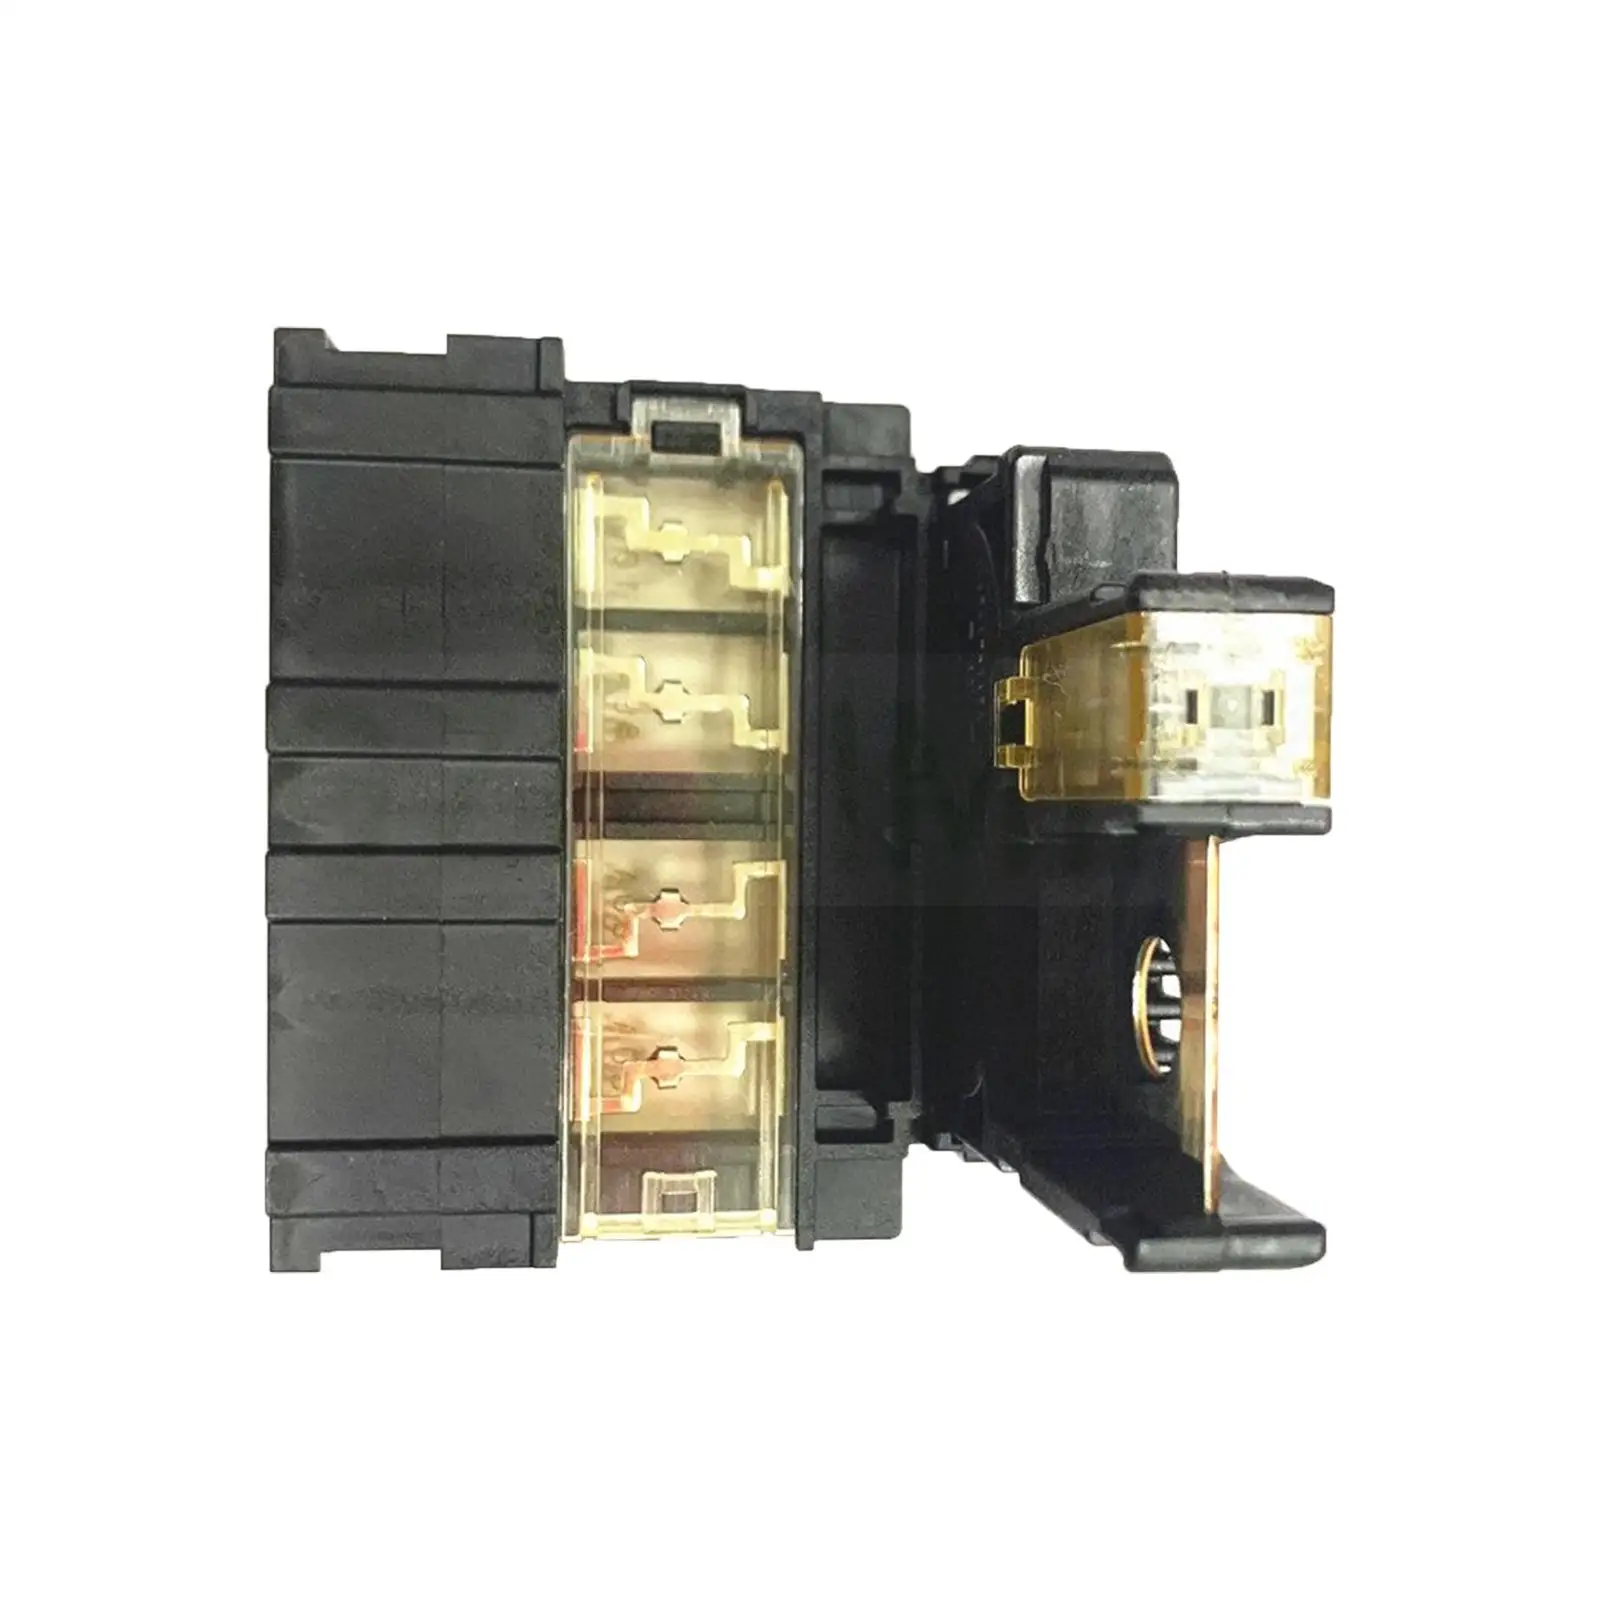 Battery Circuit Fuse Replaces, 24380-79912 ,24340-ja74A ,Durable, Premium for SX4